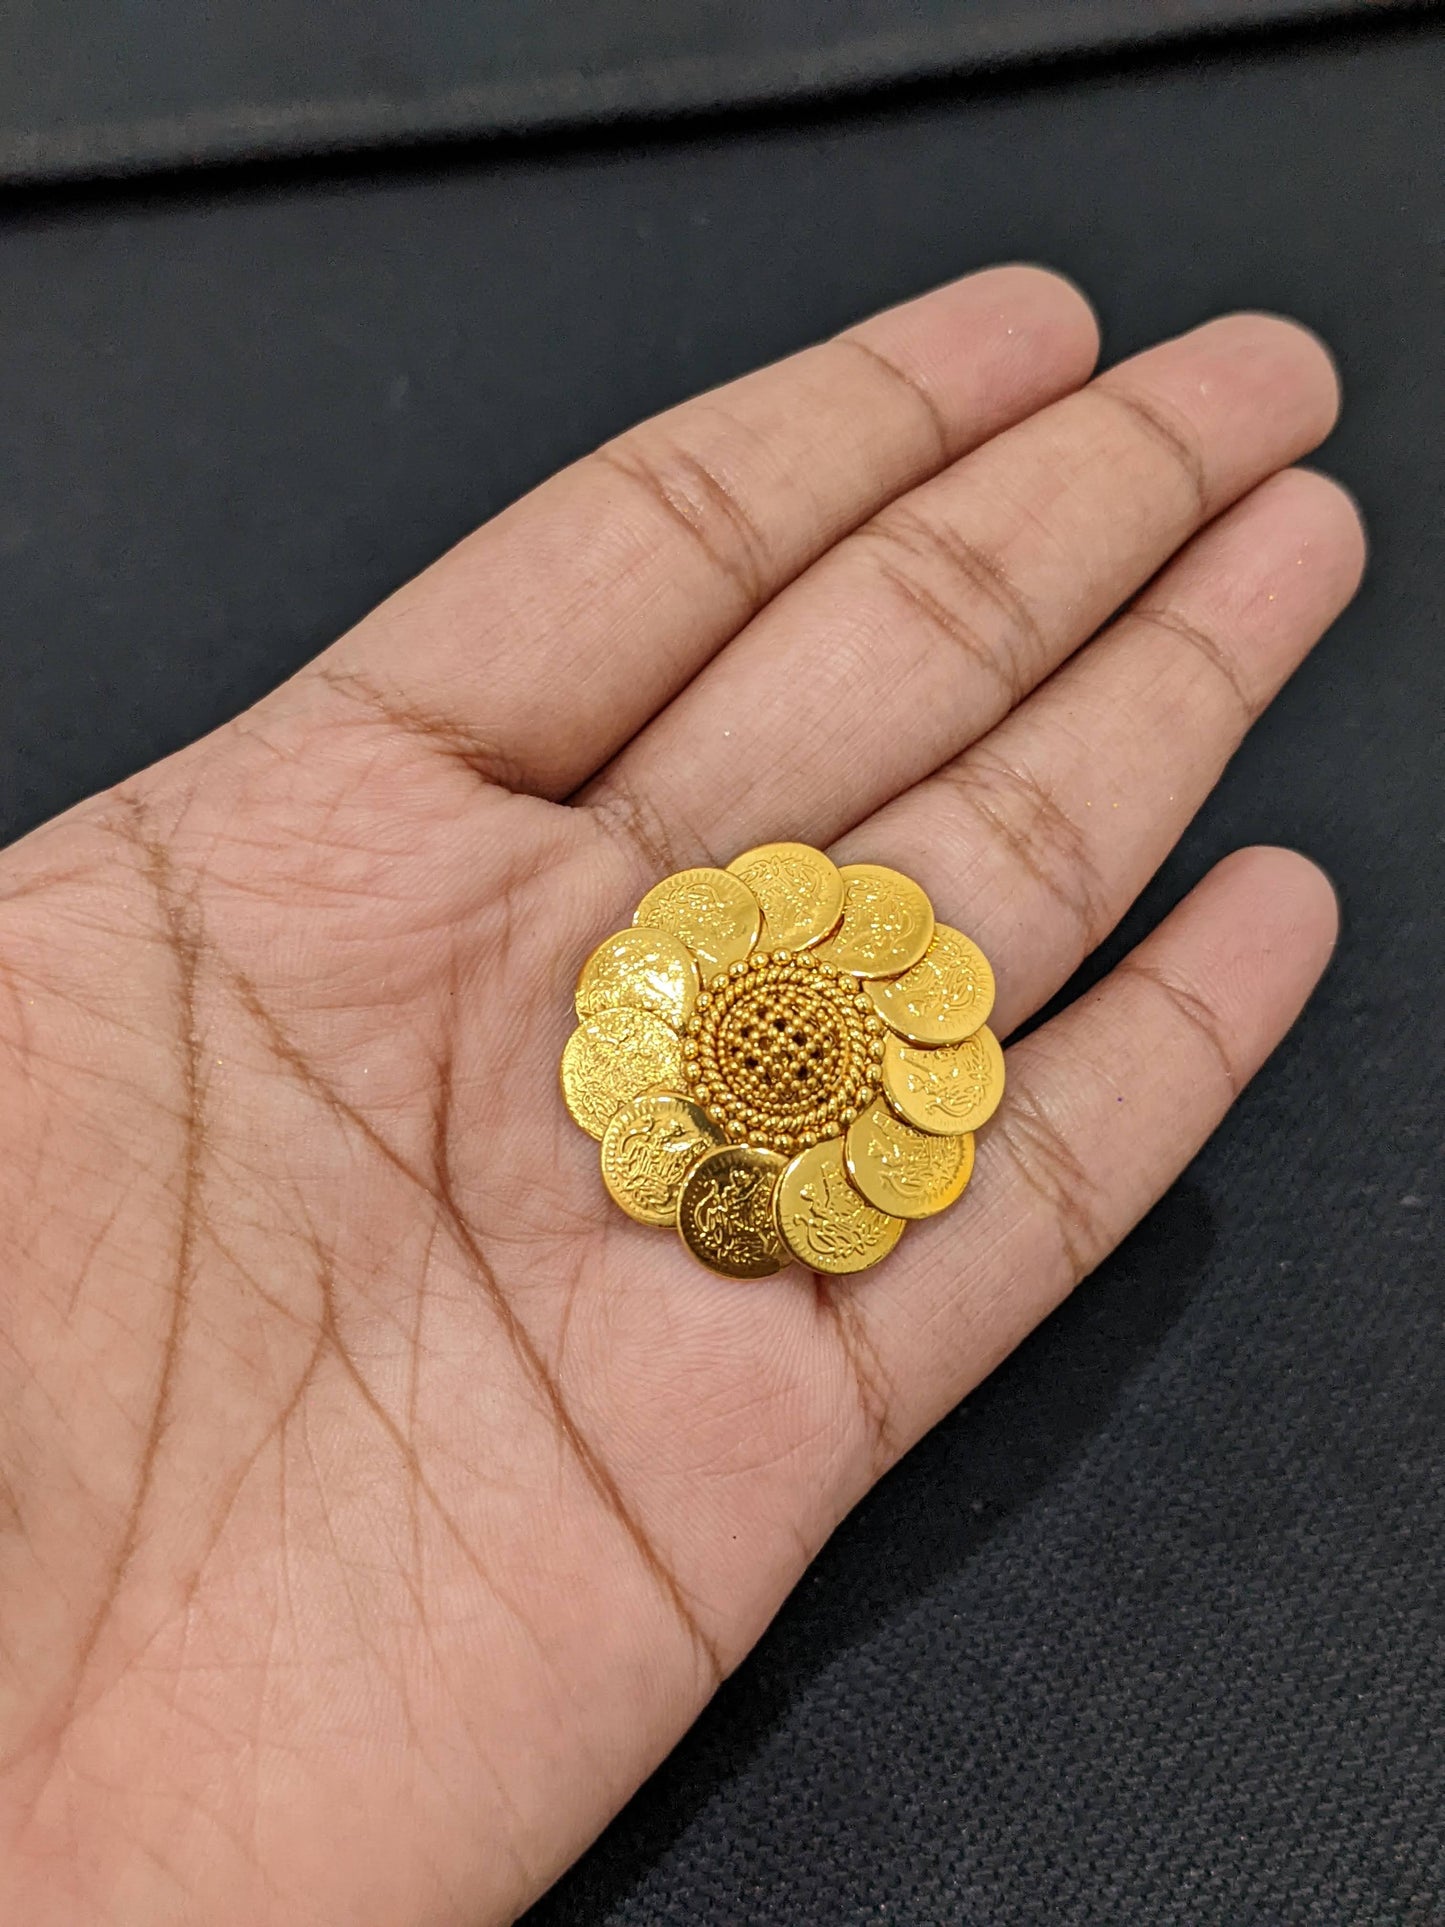 Goddess Lakshmi Gold plated adjustable Finger rings